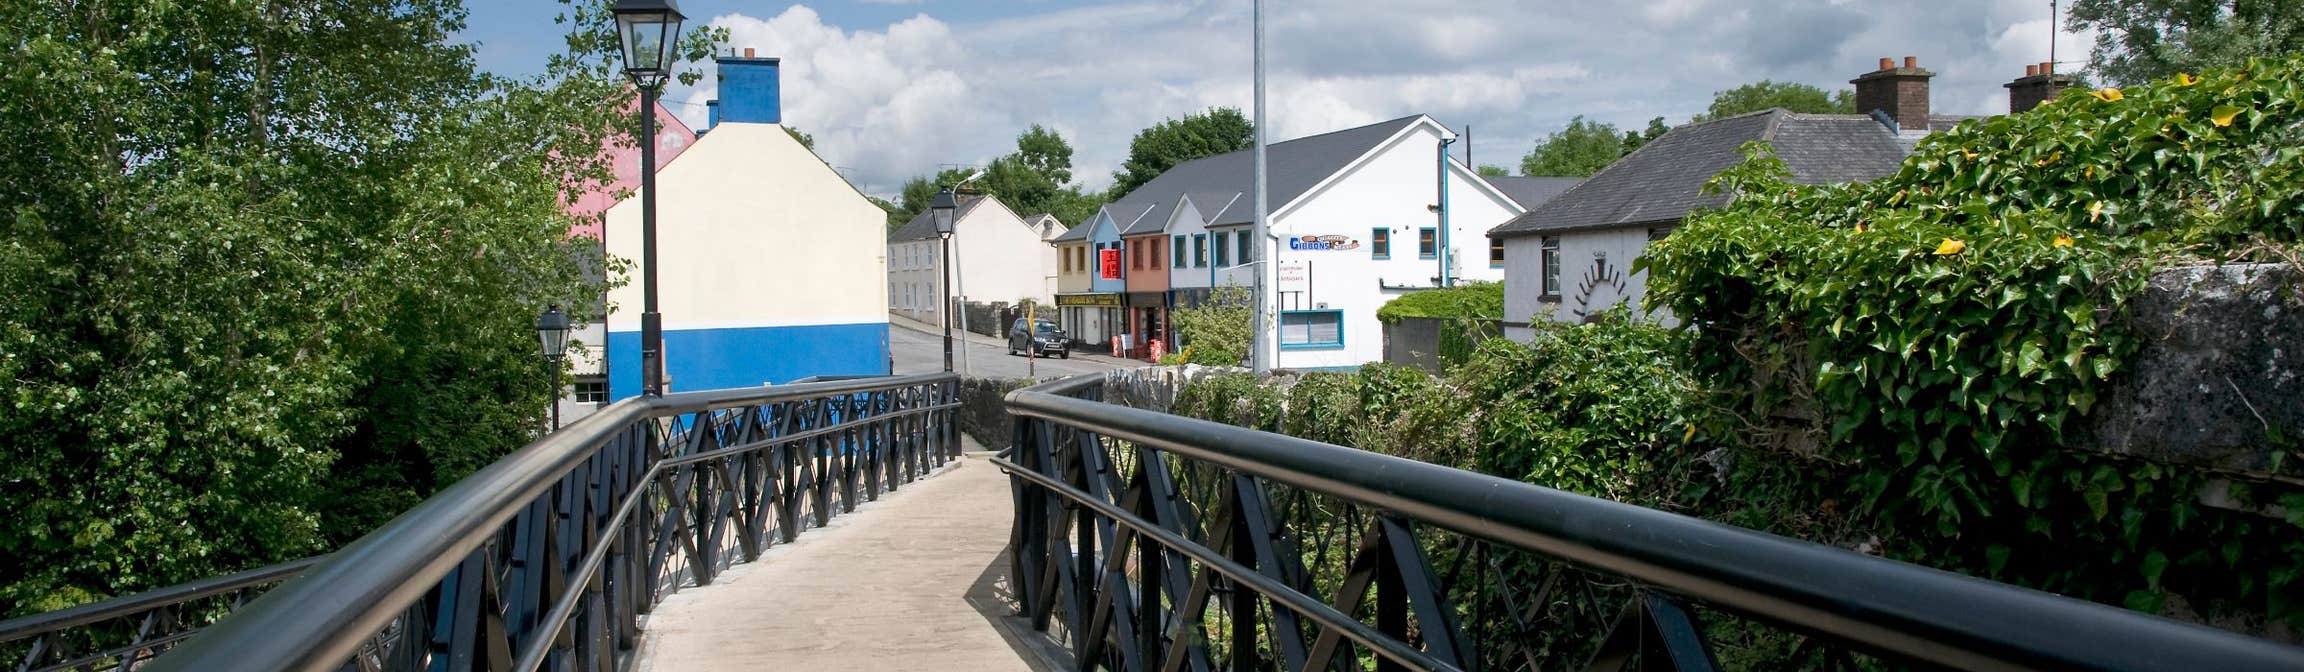 Image of Leitrim village in County Leitrim